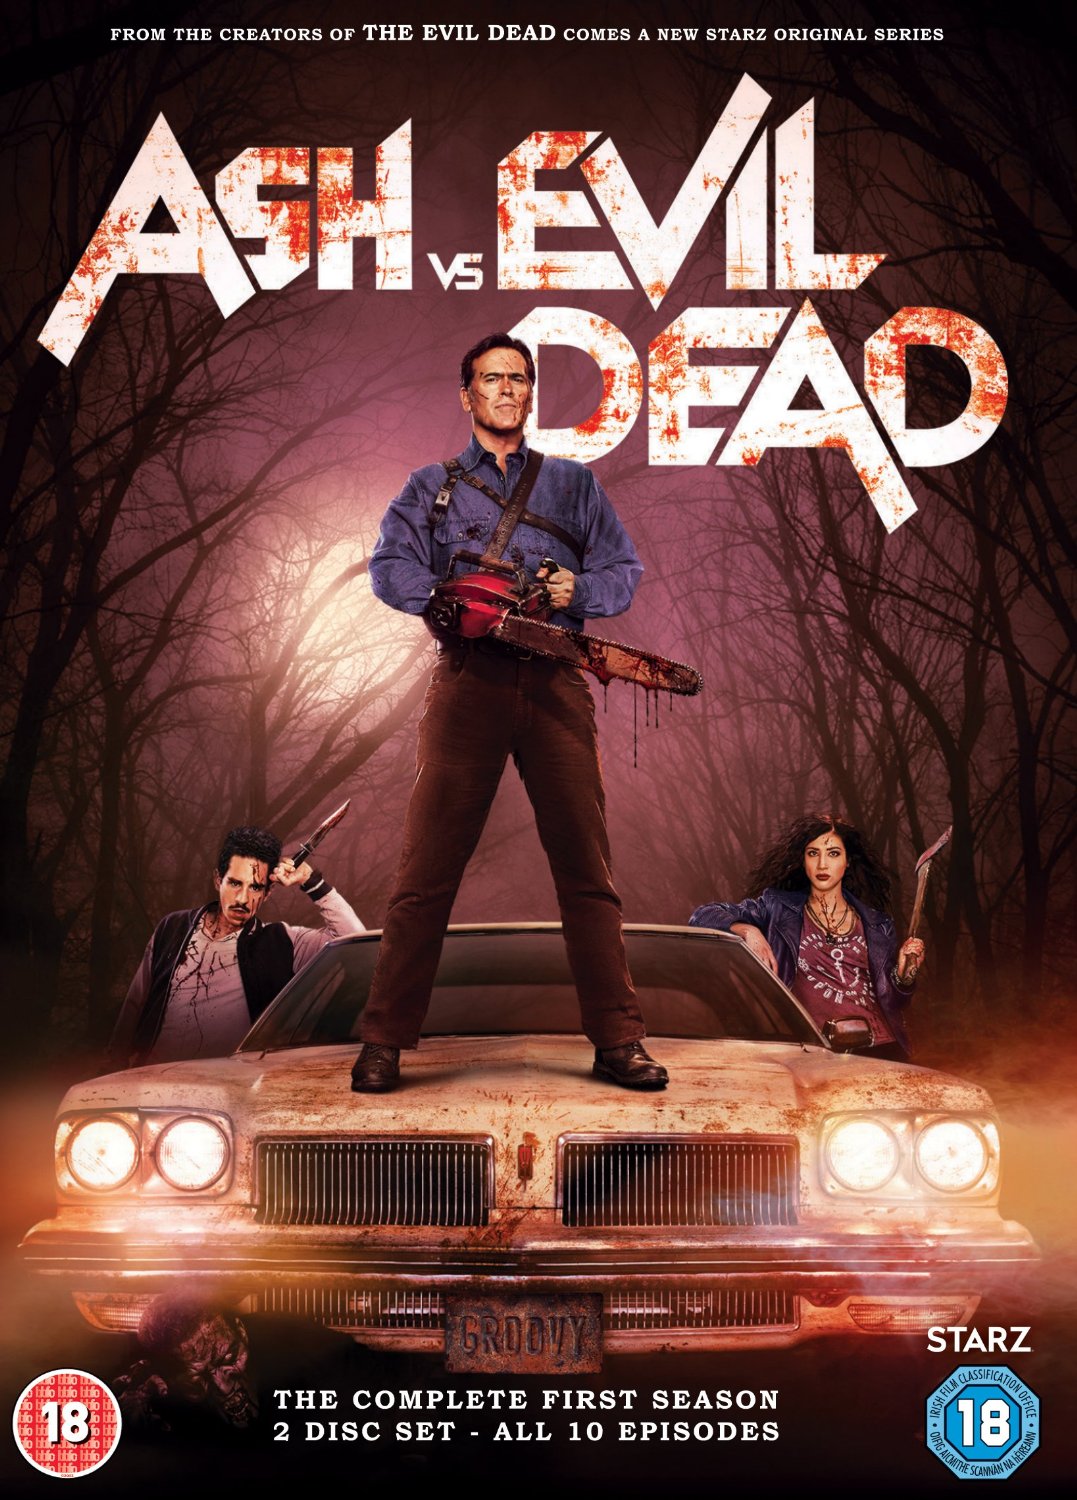 Ash Vs Evil Dead Season 1 DVD review